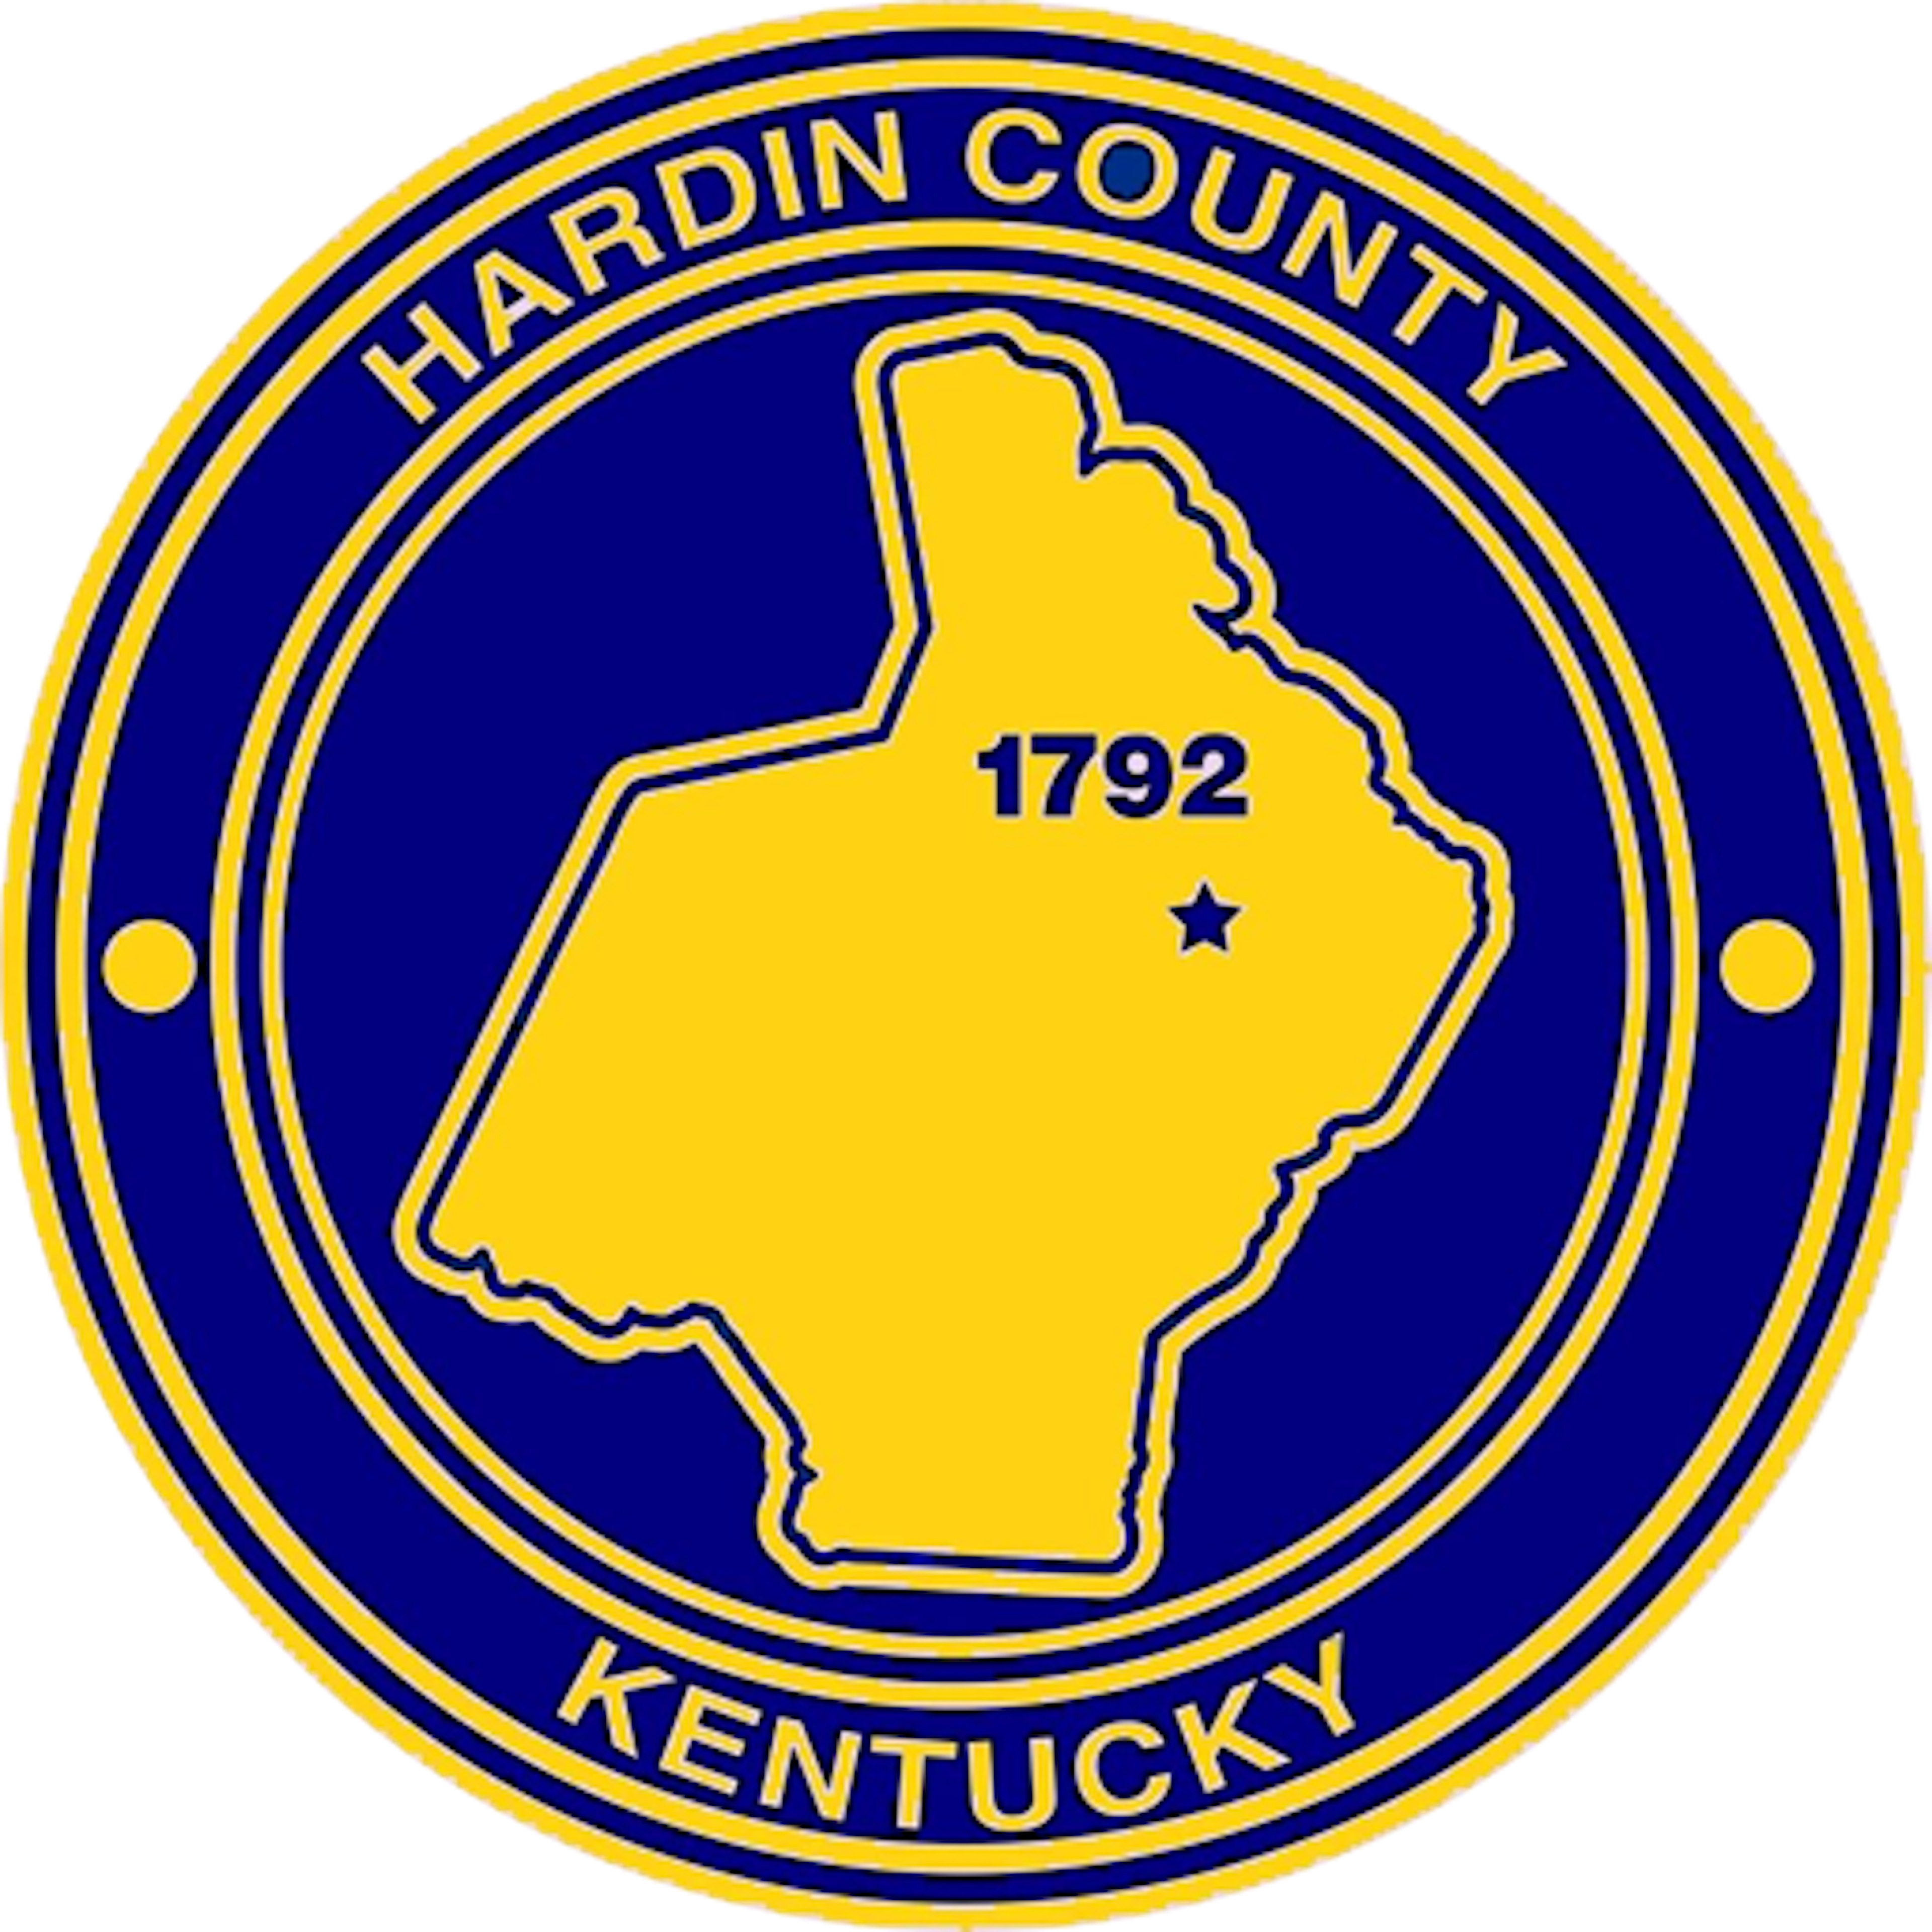 Hardin County Kentucky logo